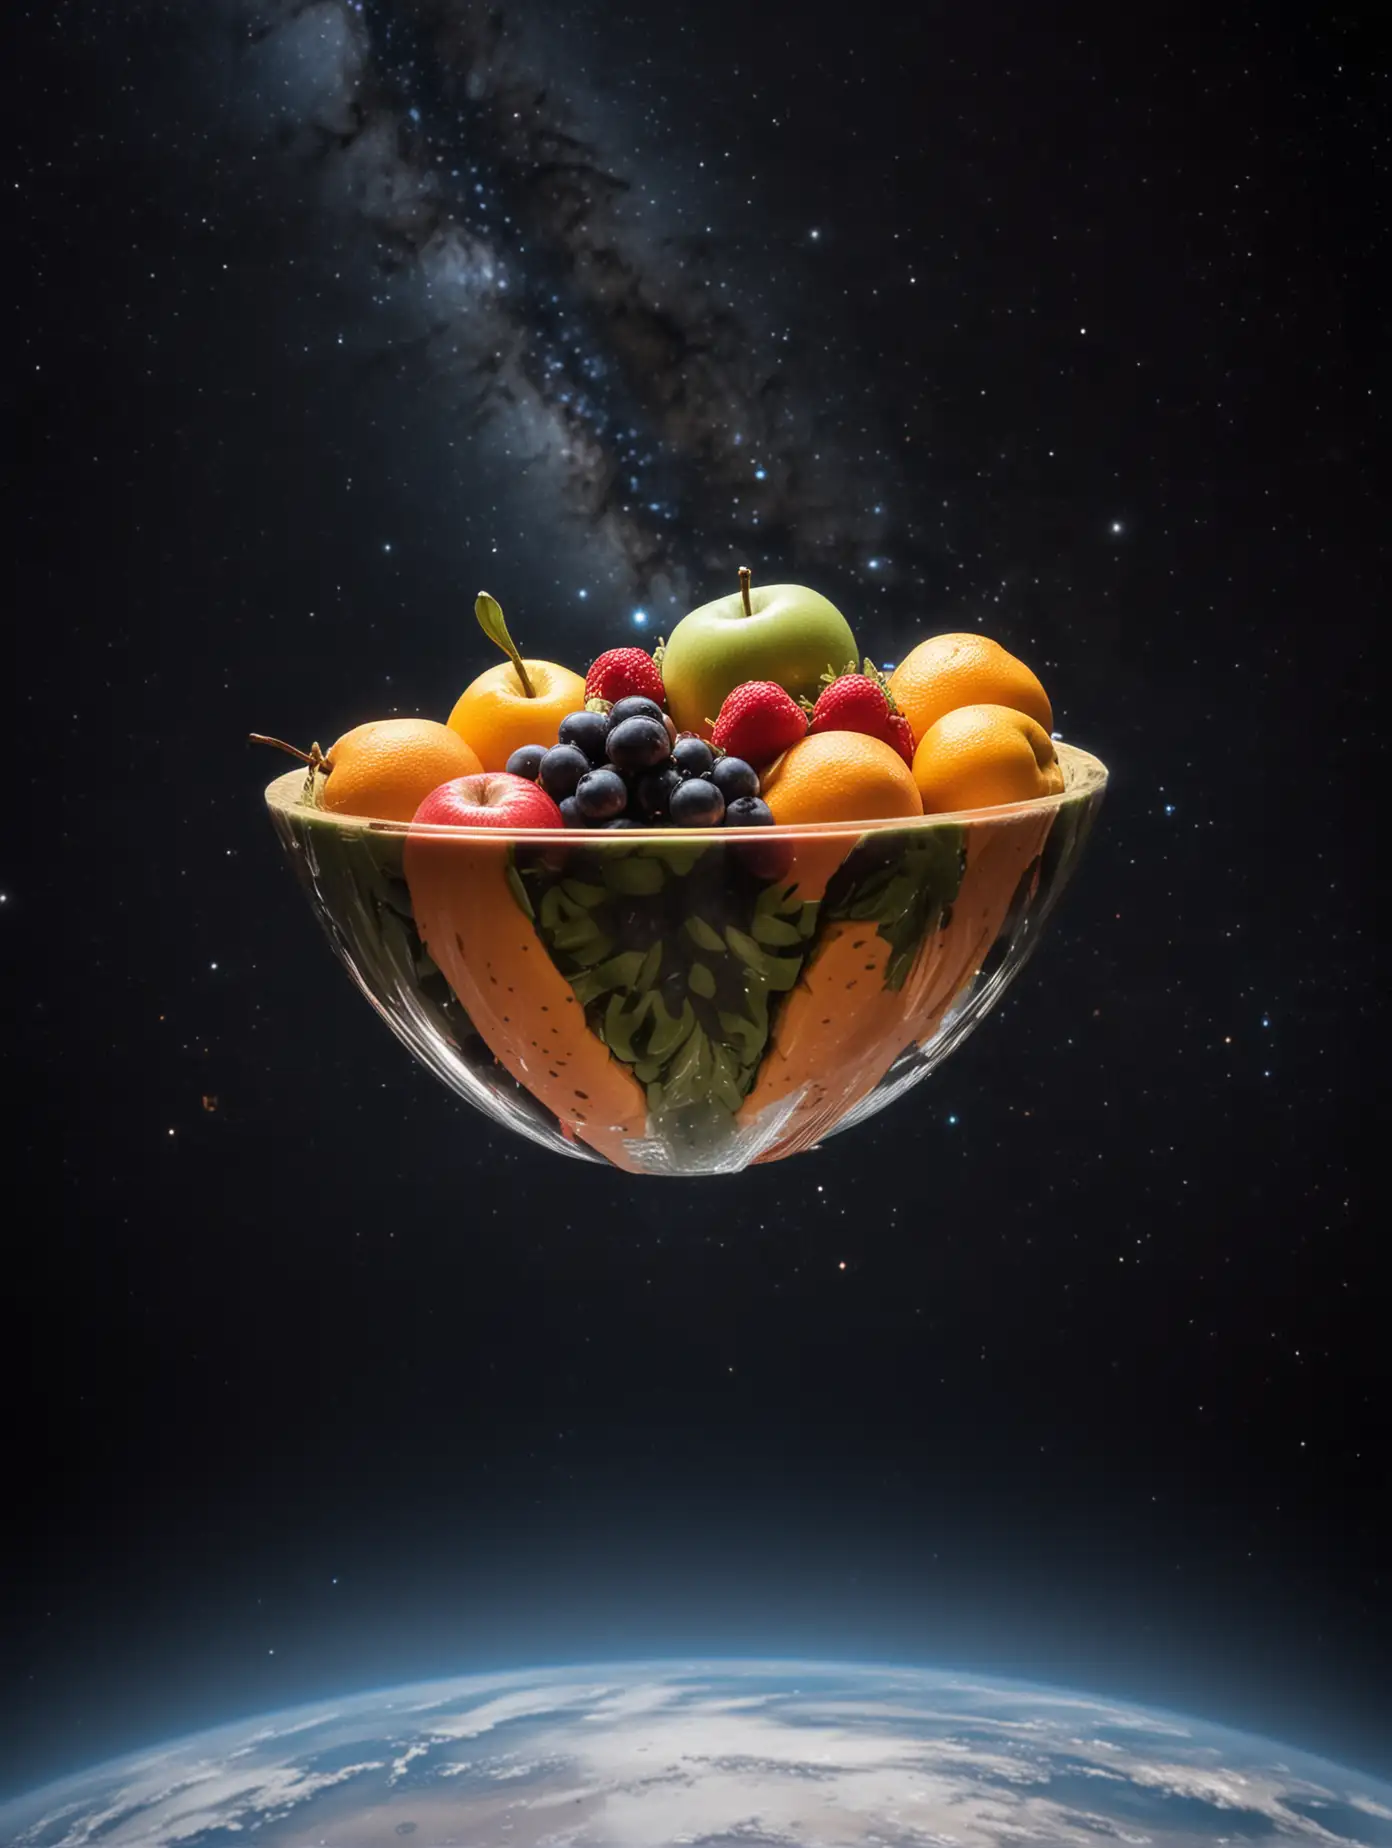 Floating Fruit Bowl in Cosmic Space